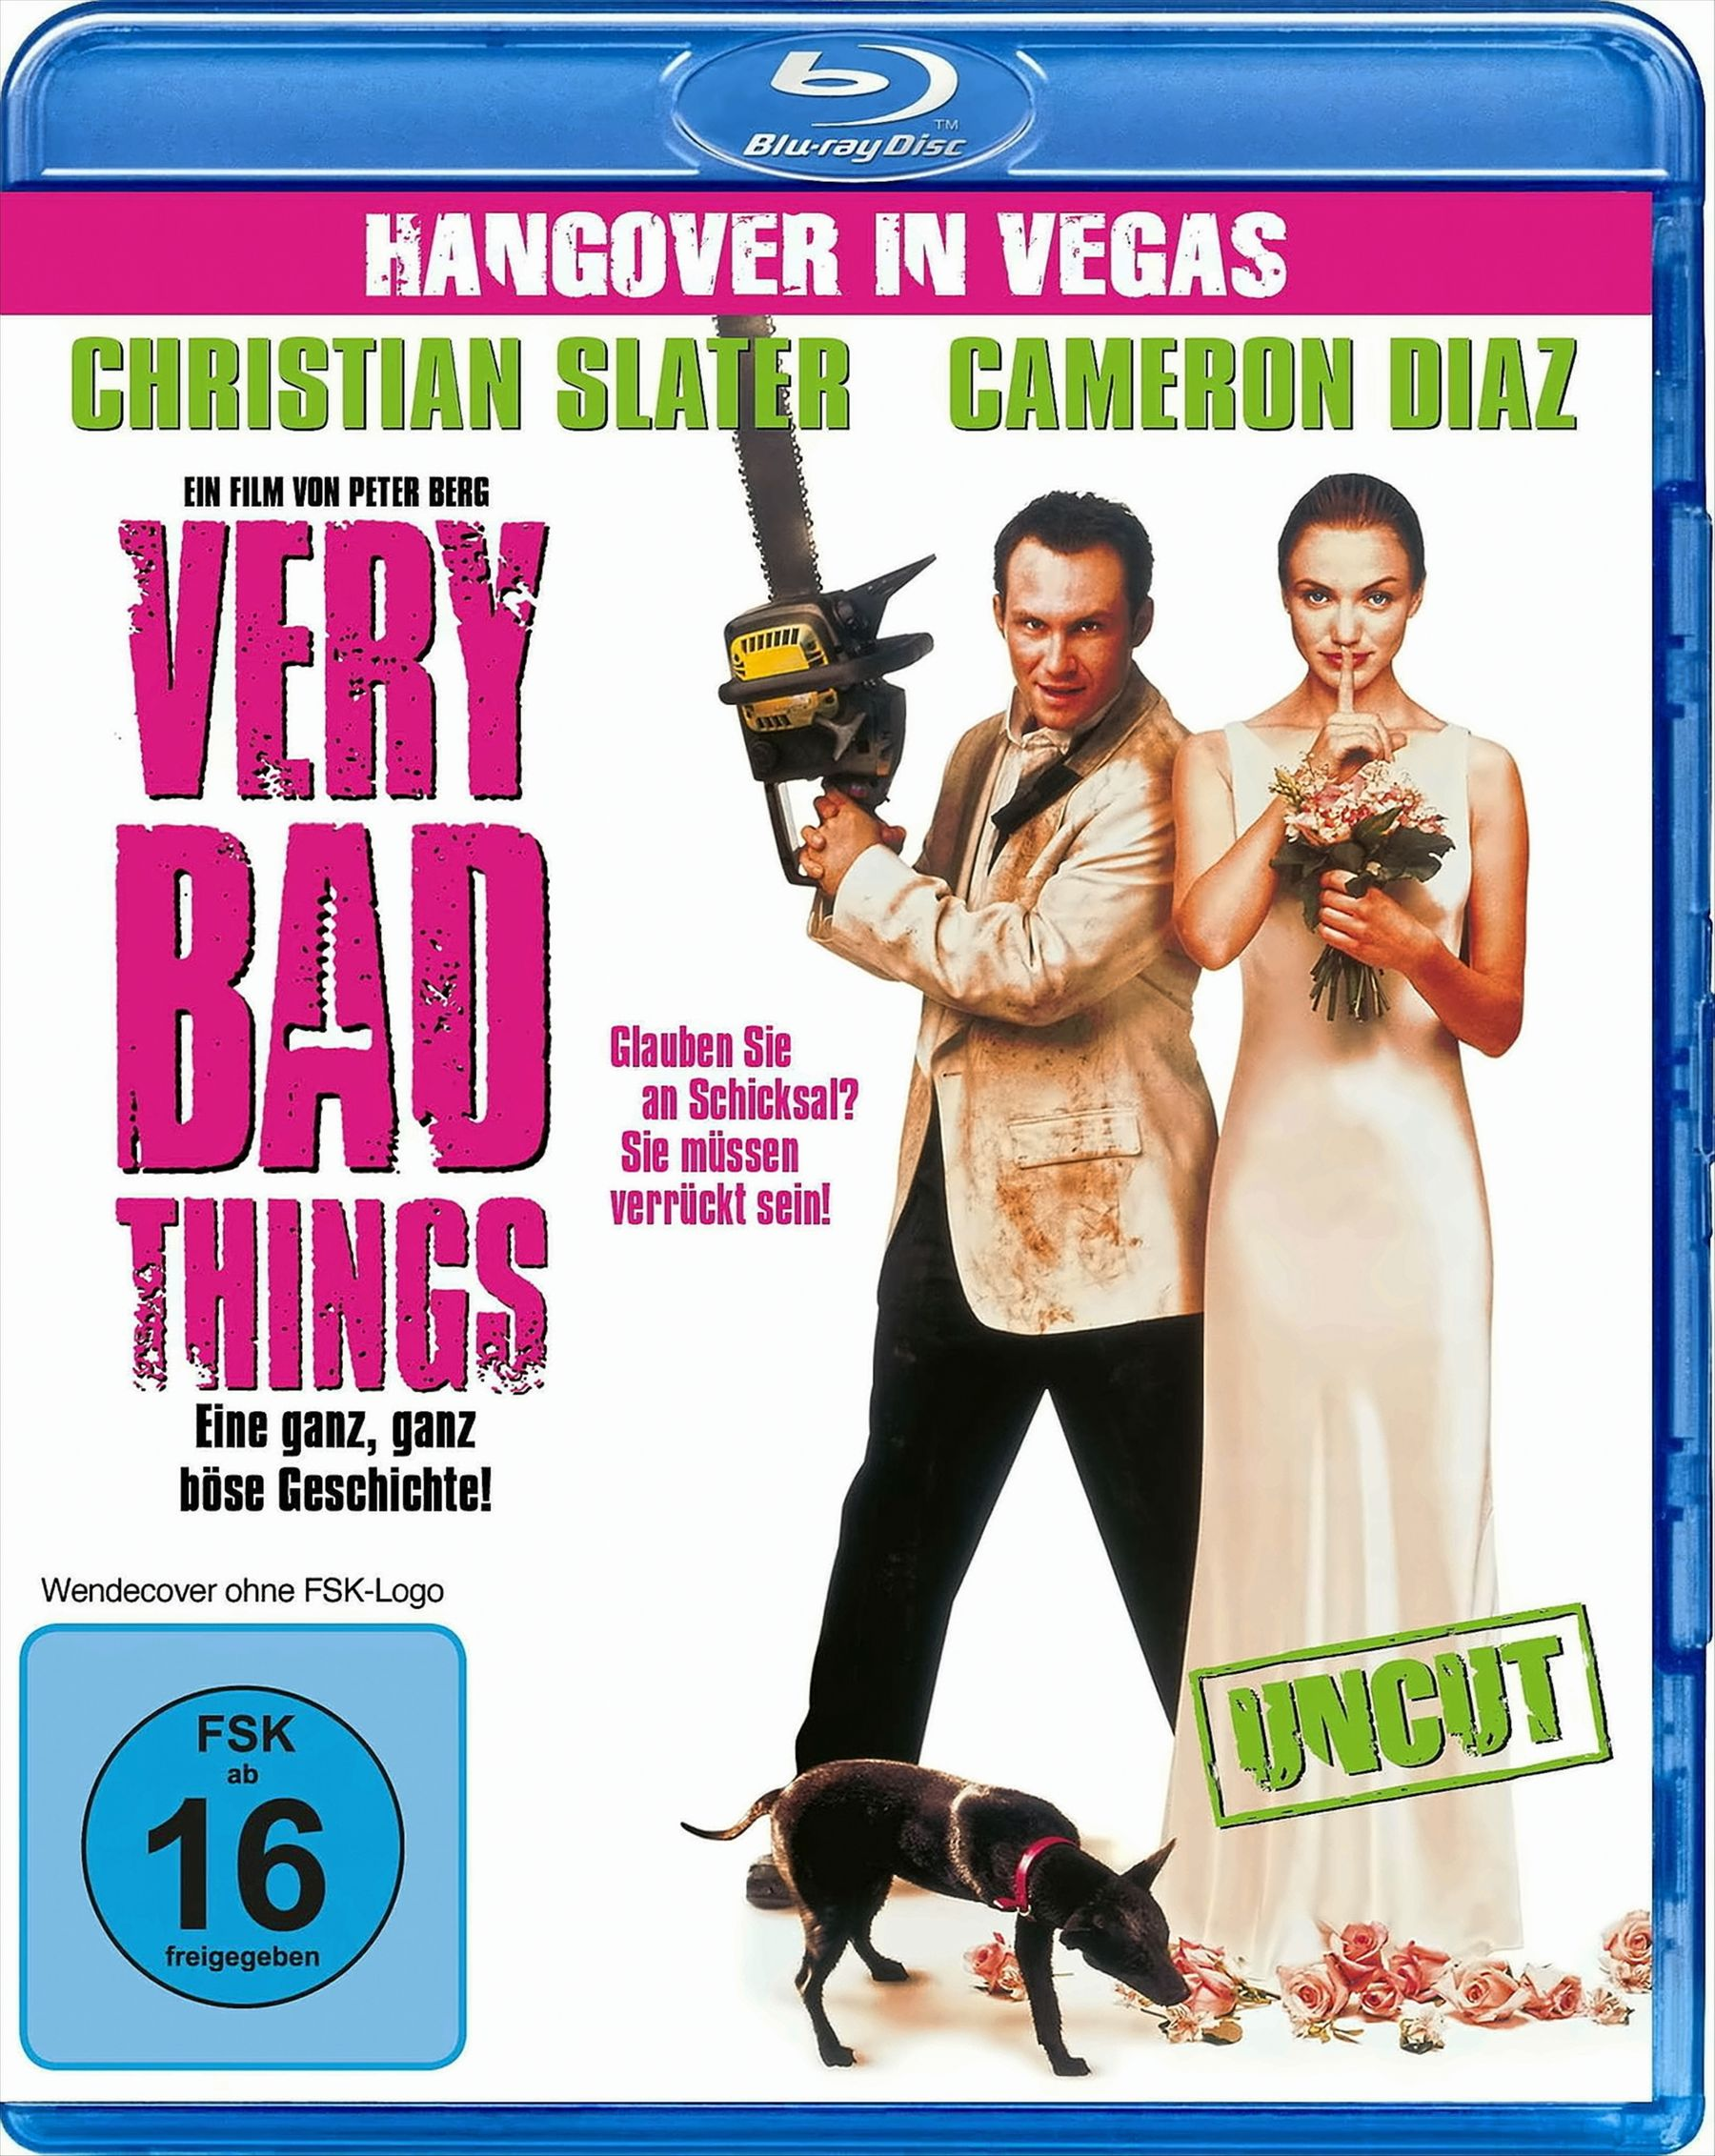 Vegas - Bad Hangover in Blu-ray Very Things